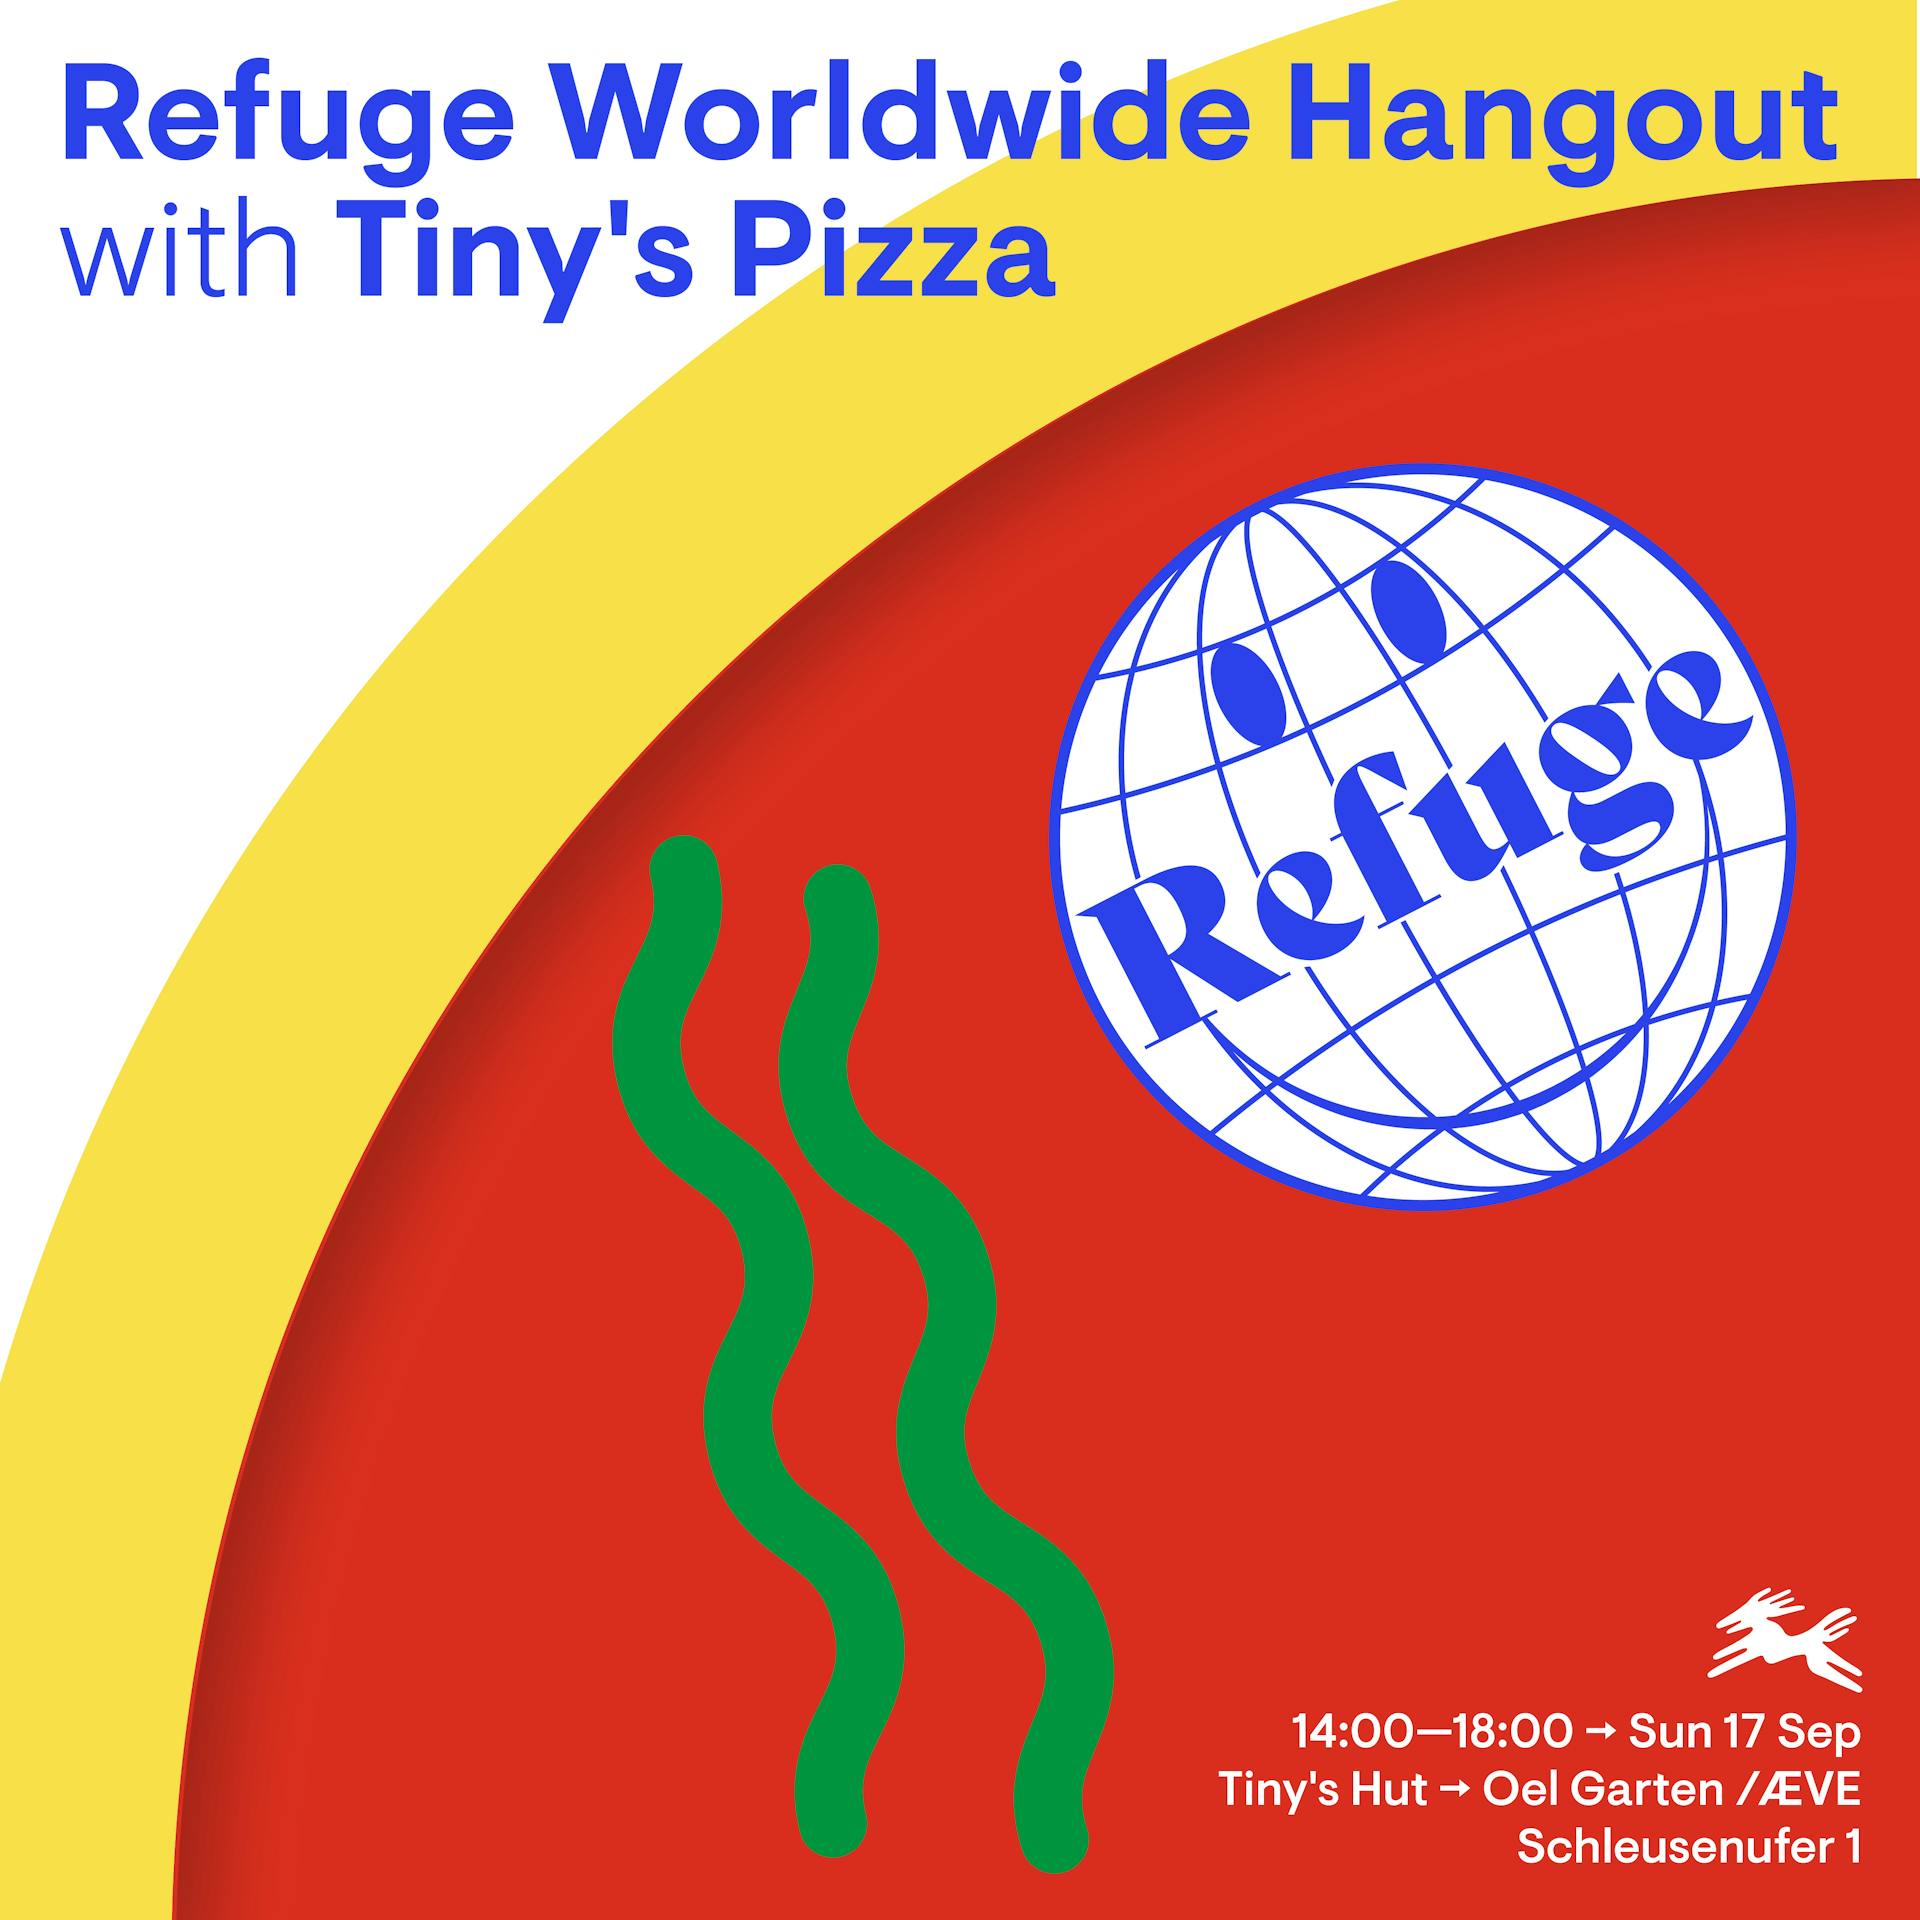 230917 RW Hangout Artwork - Tiny-s Pizza final